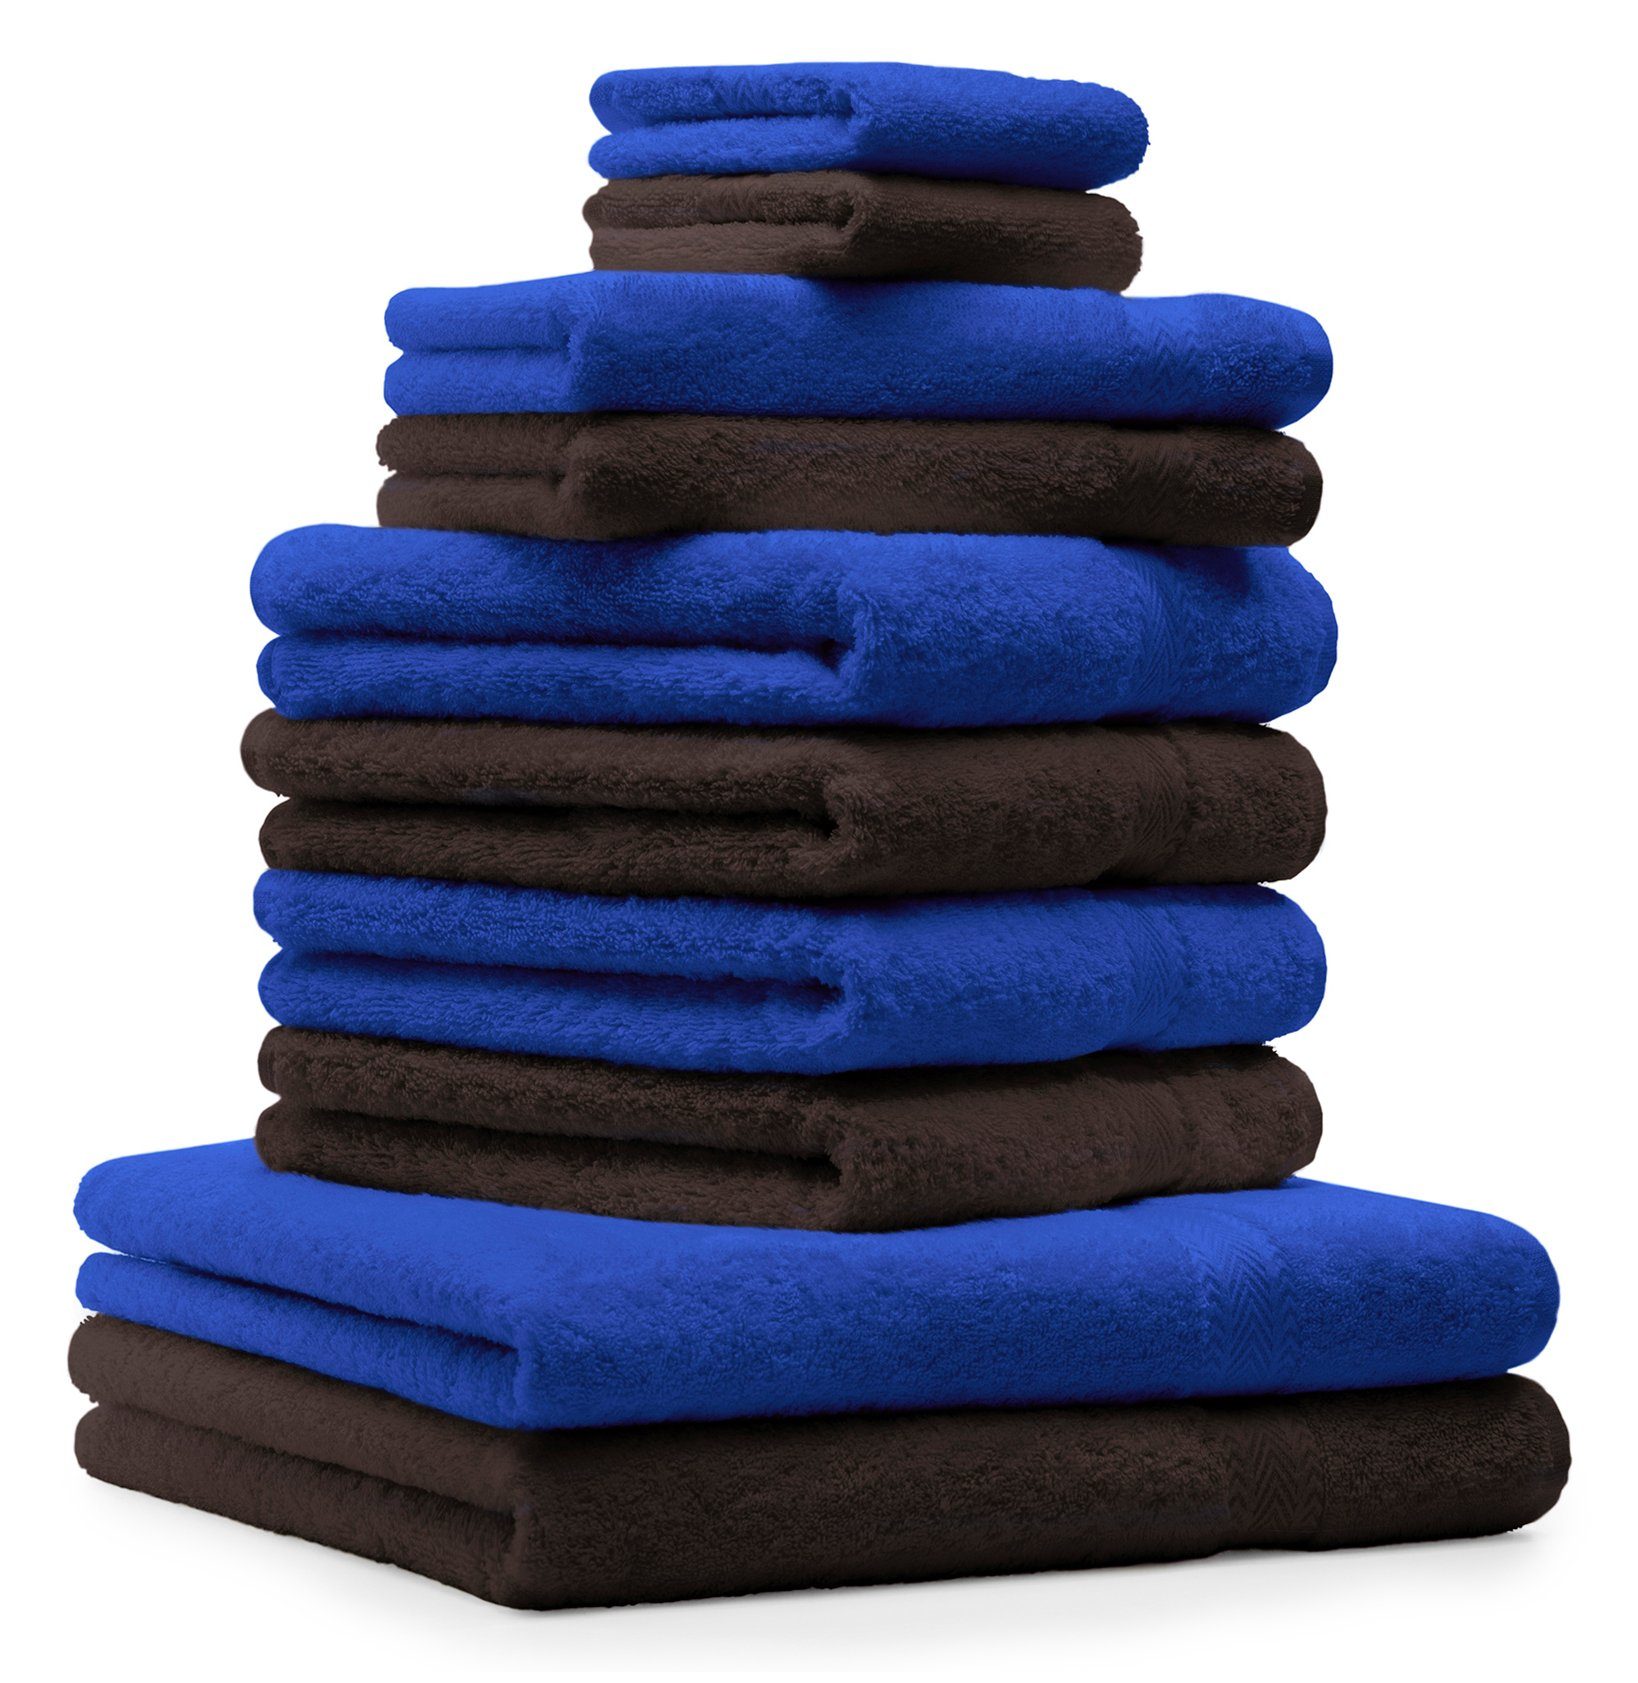 Betz Handtuch Set 10-TLG. Handtuch-Set Premium 100% Baumwolle 2 Duschtücher 4 Handtücher 2 Gästetücher 2 Waschhandschuhe Farbe Royal Blau & Dunkel Braun, 100% Baumwolle, (10-tlg)